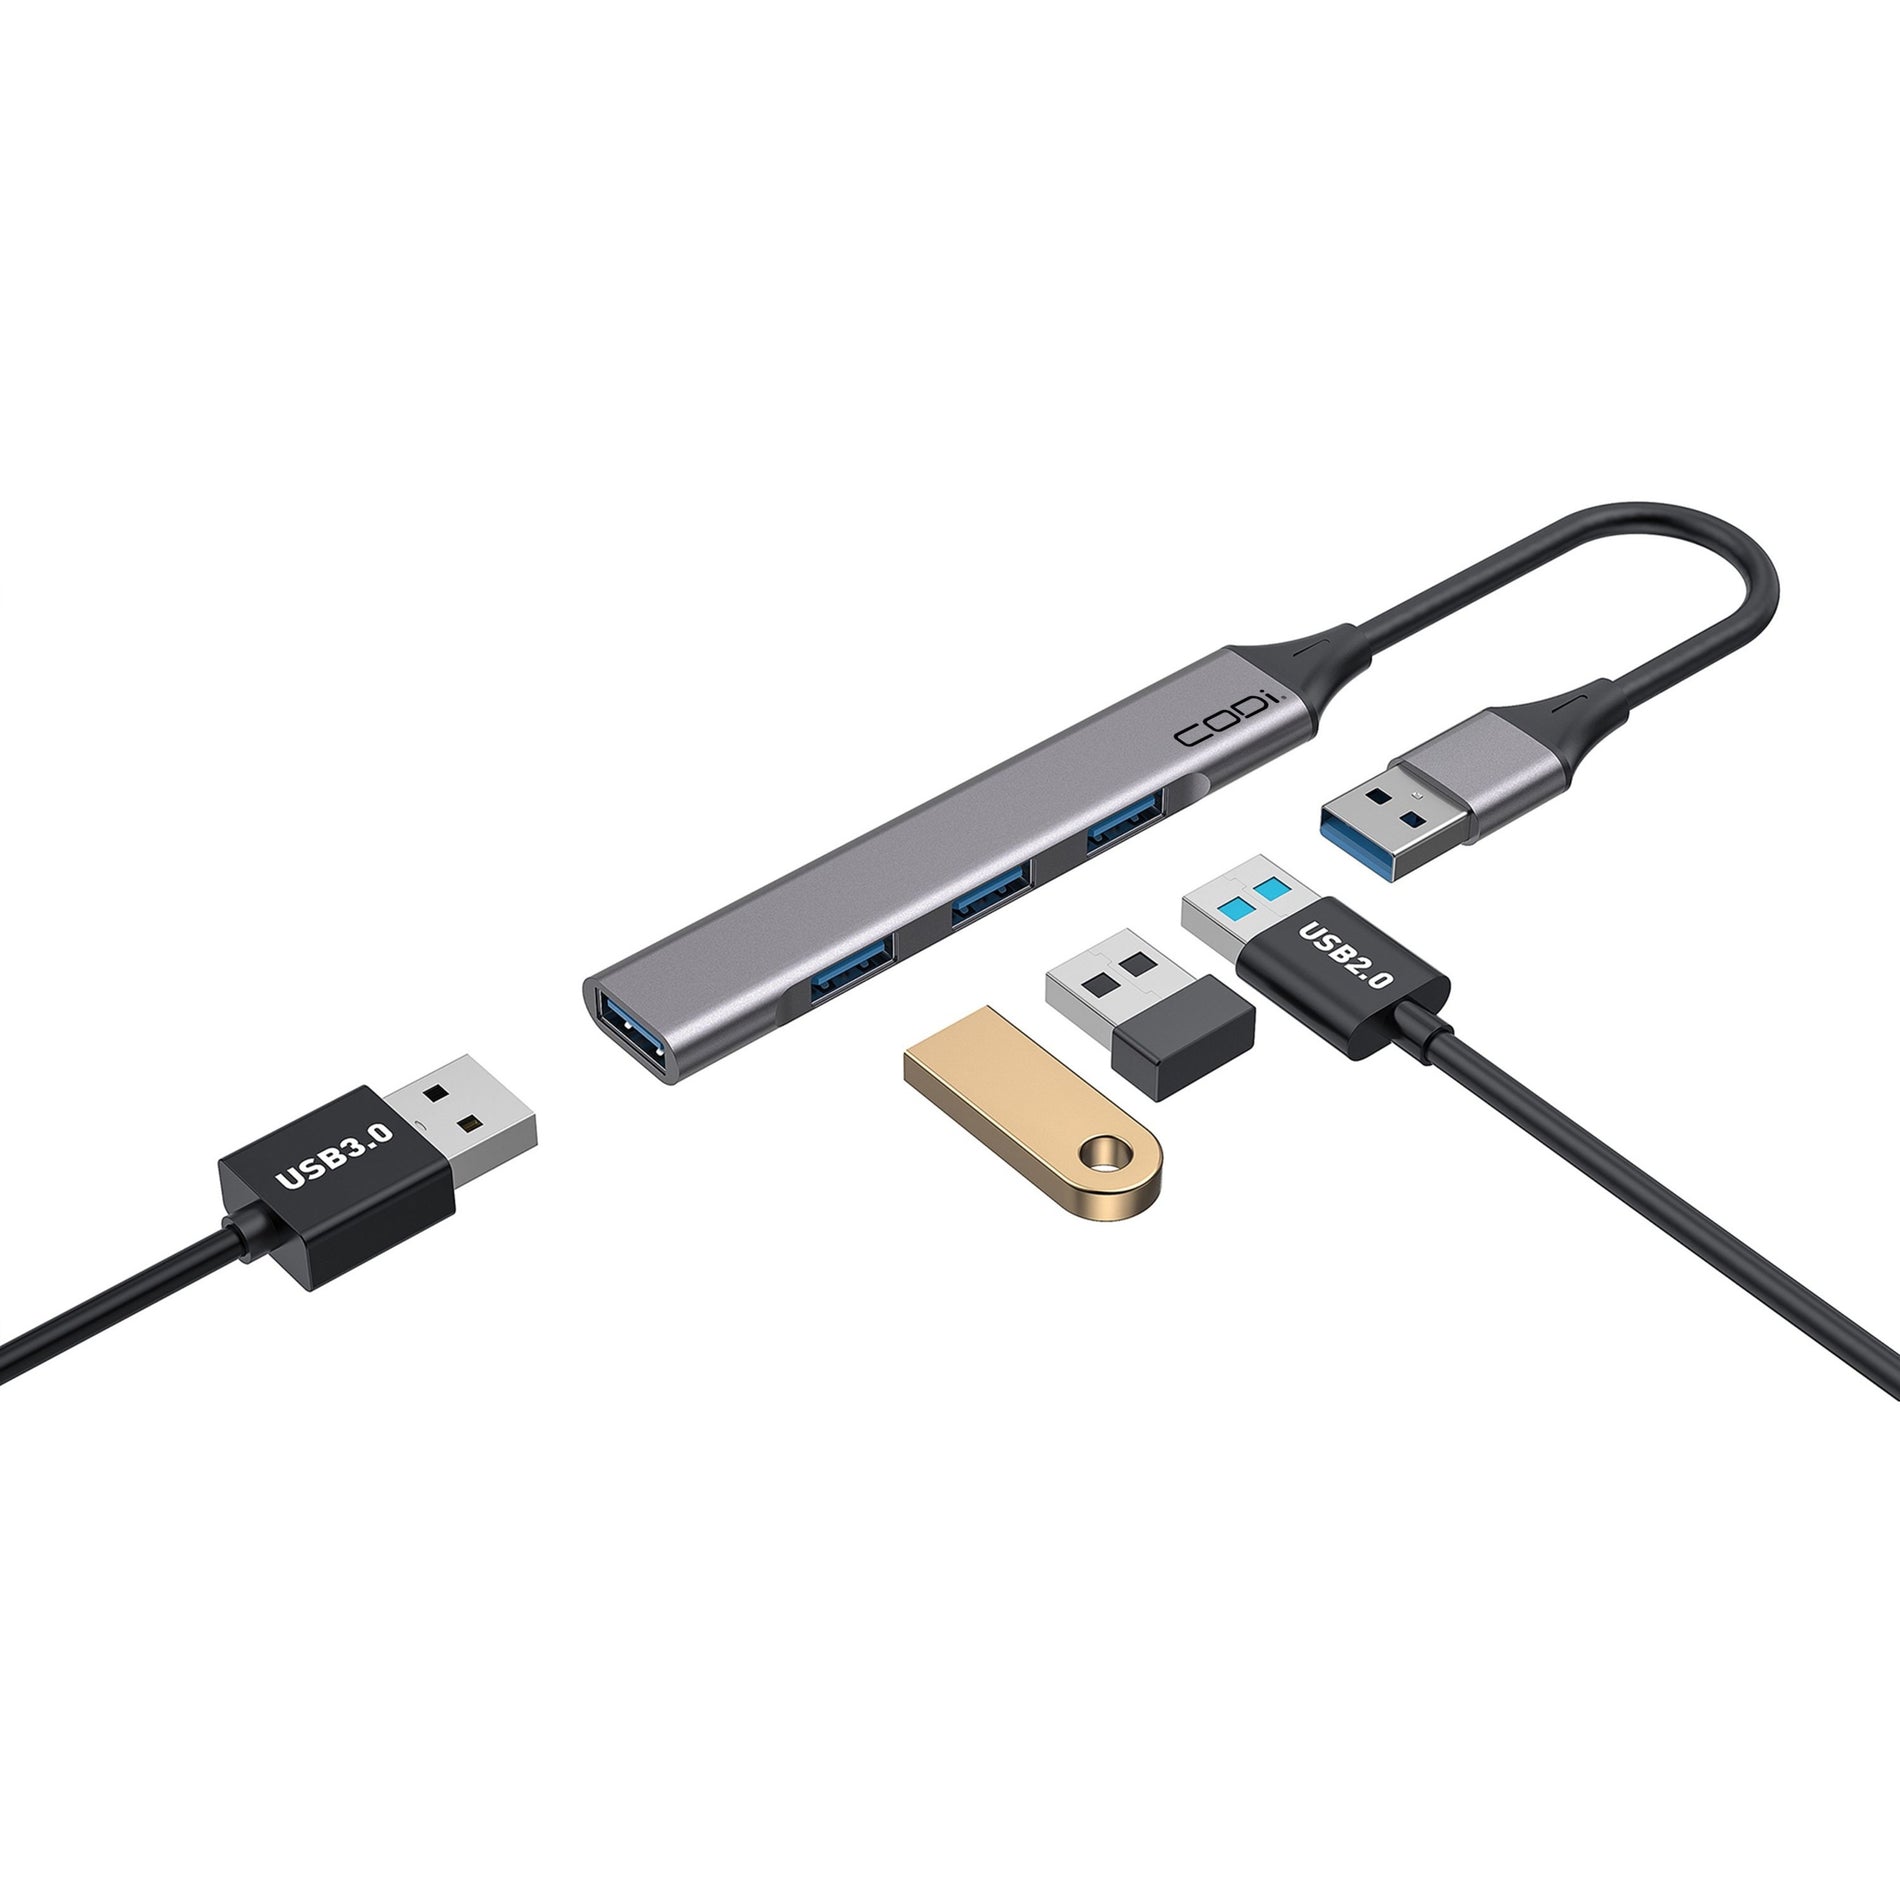 CODi A01113 USB-A 4-Port Hub, Expand Your USB Connectivity